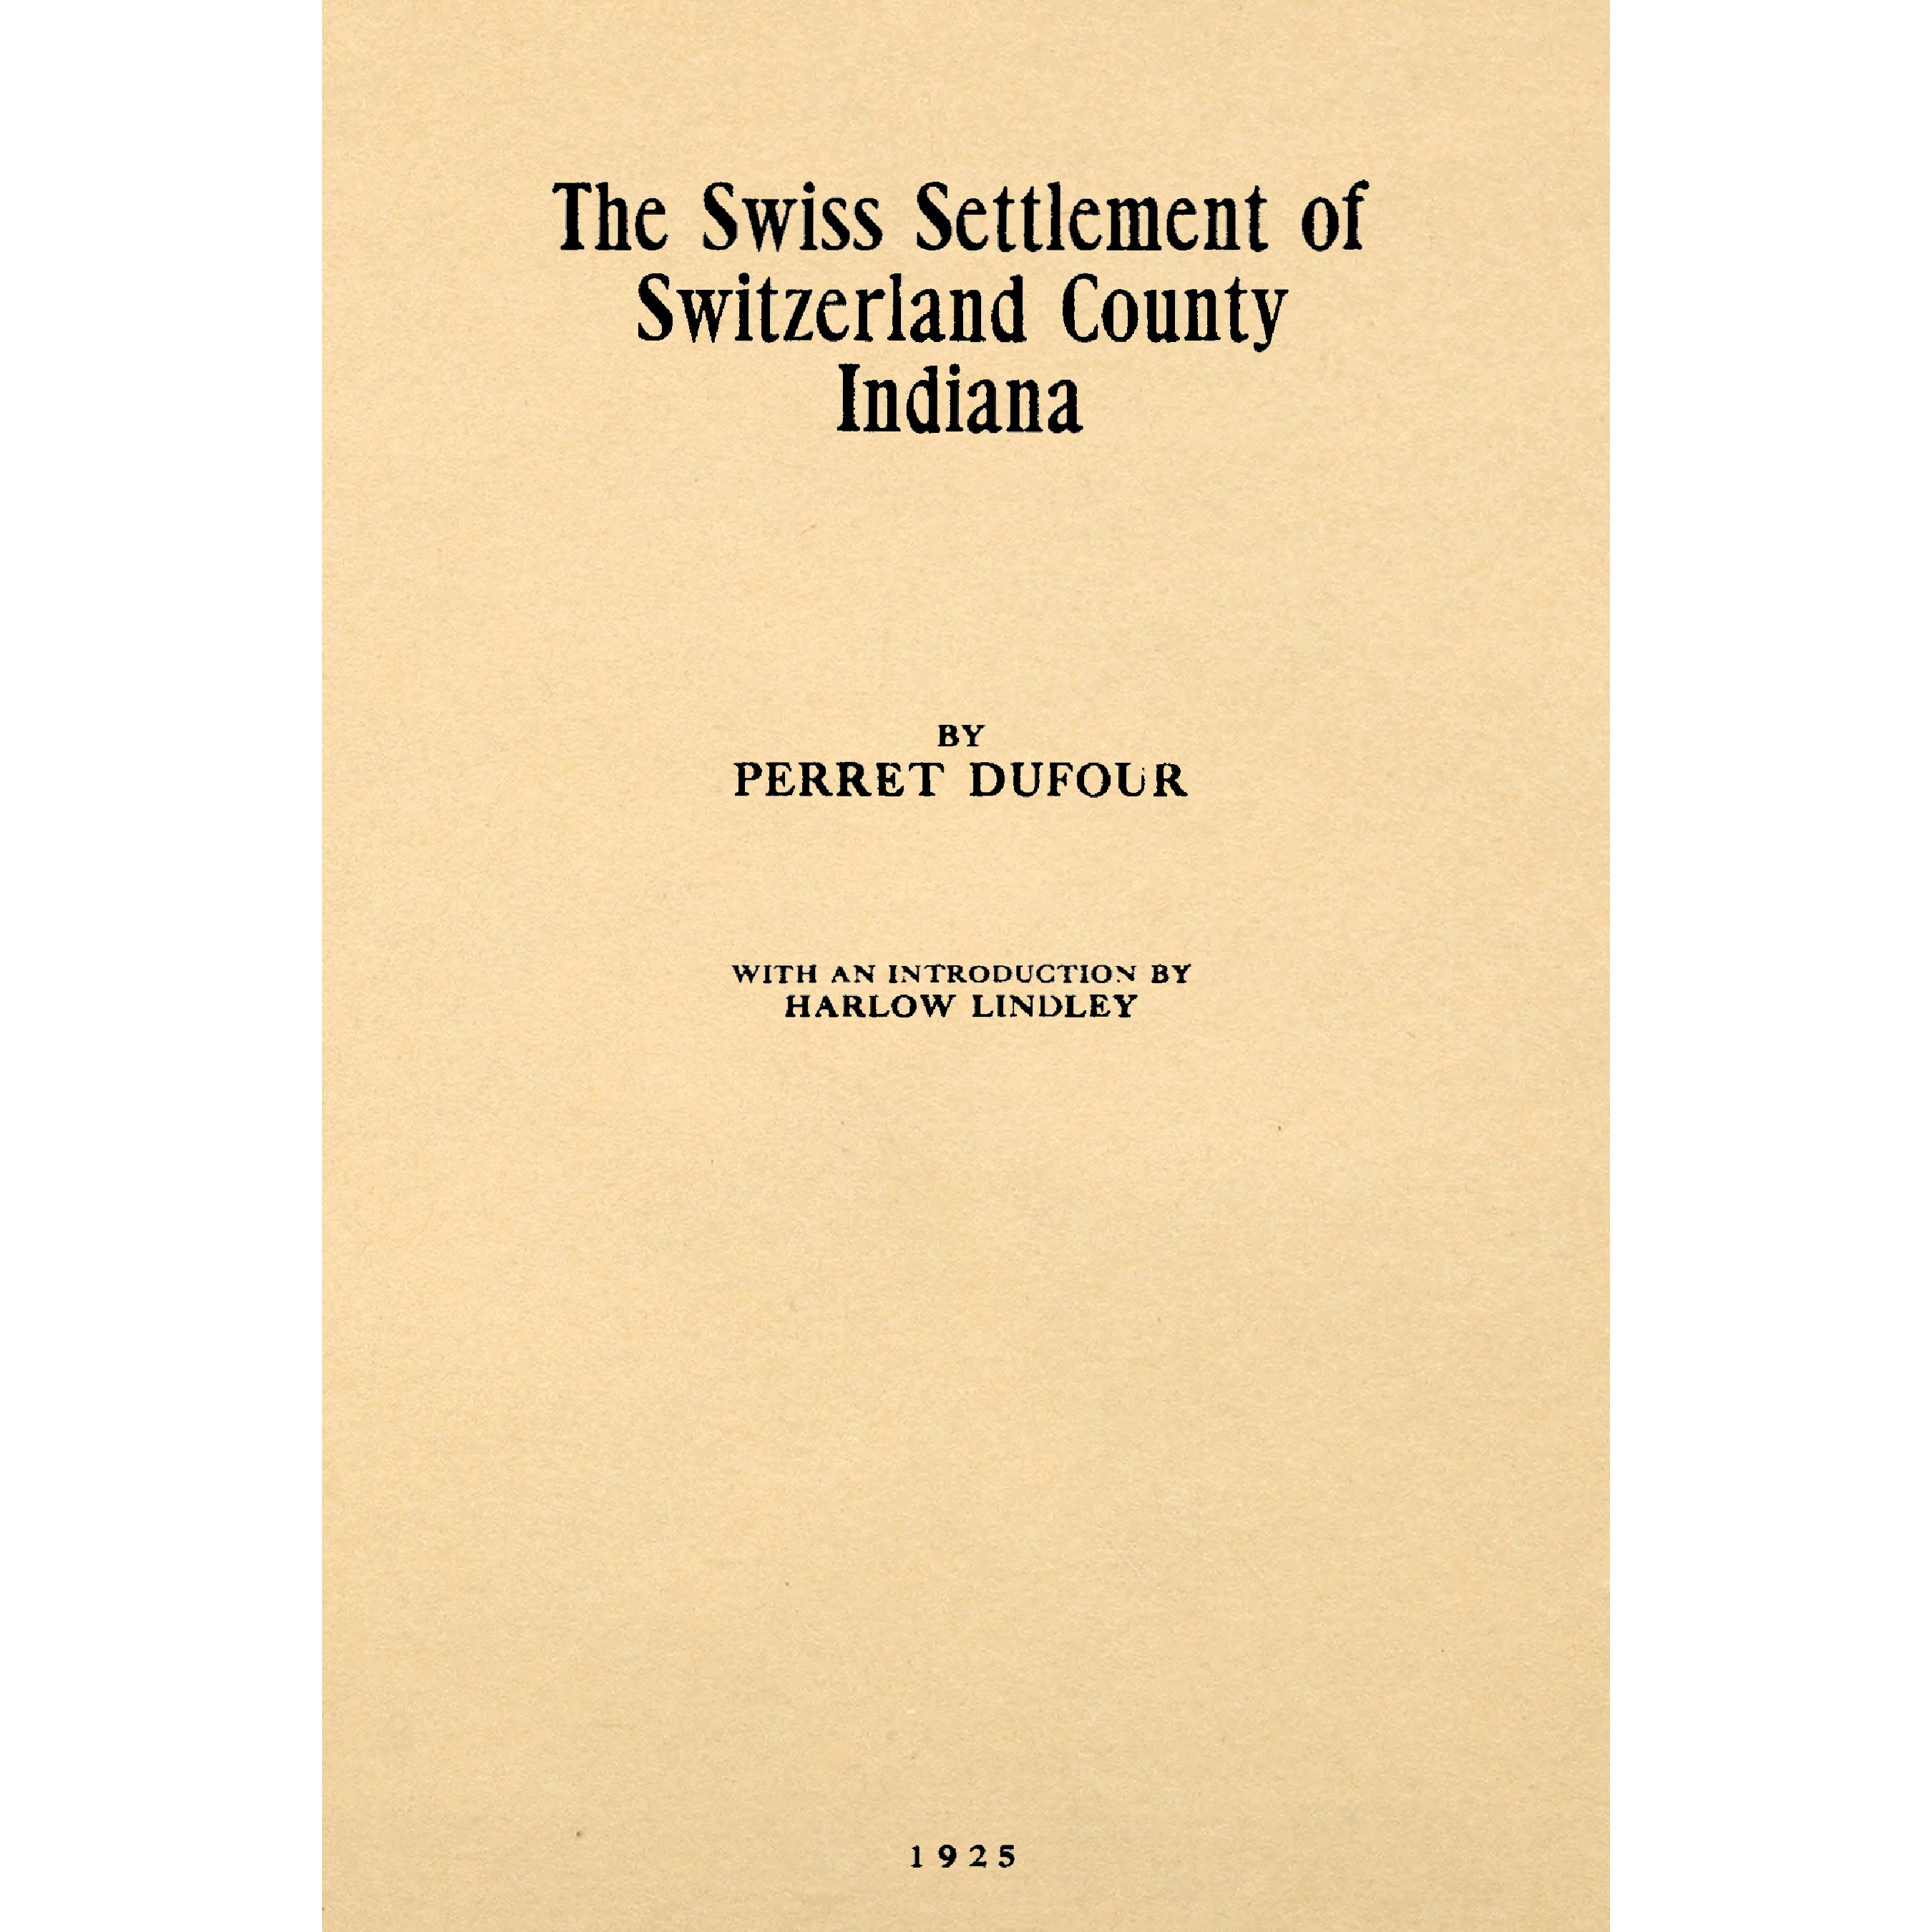 The Swiss Settlement of Switzerland County, Indiana